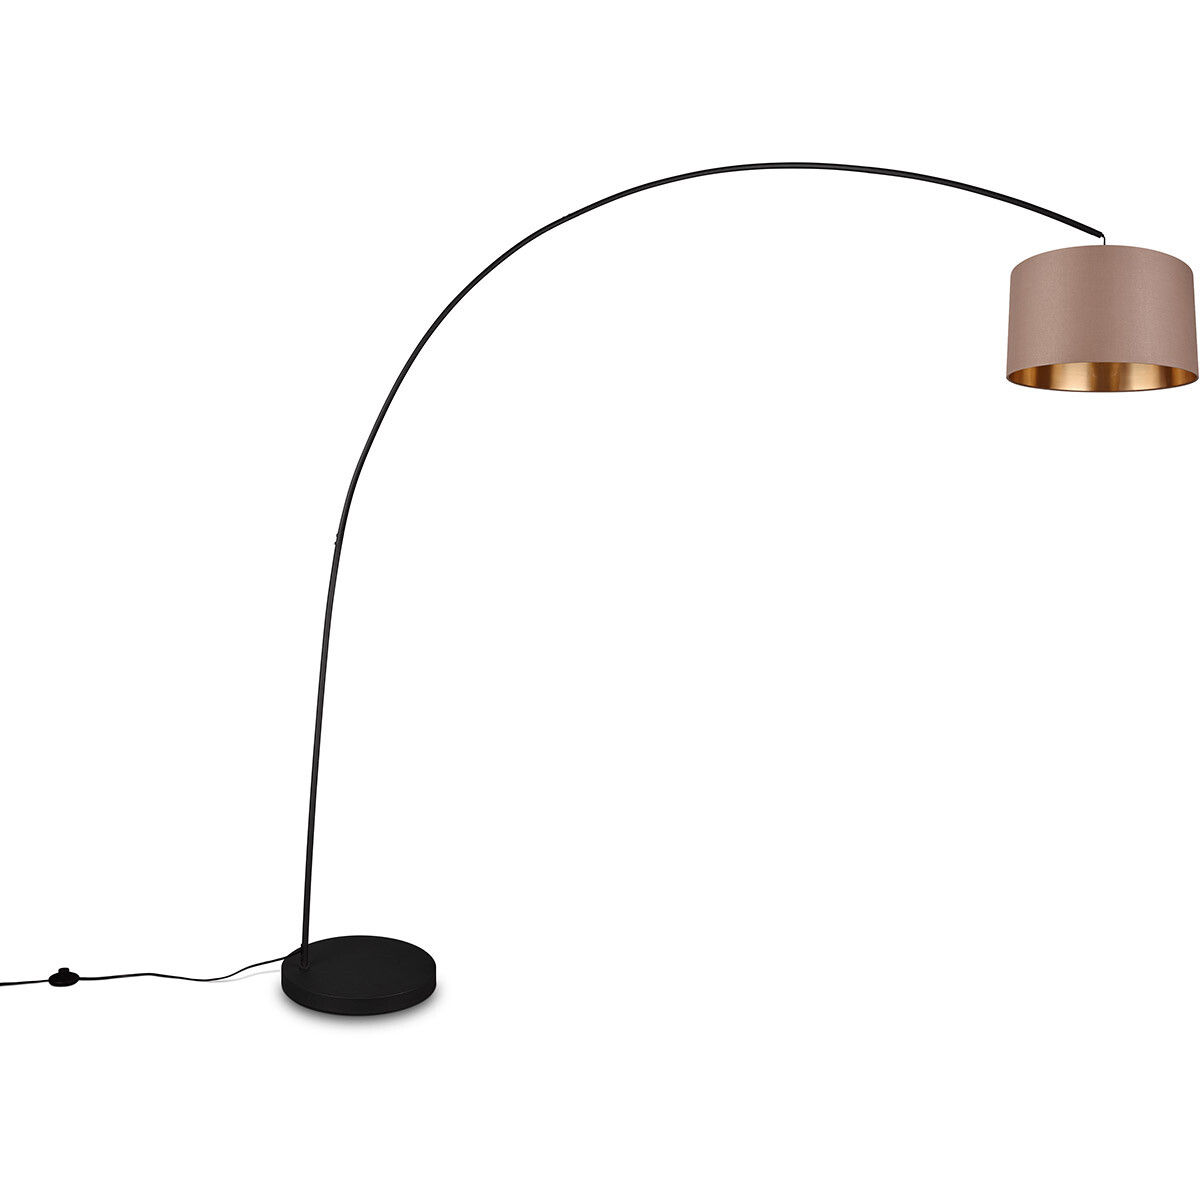 LED Vloerlamp - Trion Yavas - E27 Fitting - Voetschakelaar - Rond - Taupe - Metaal